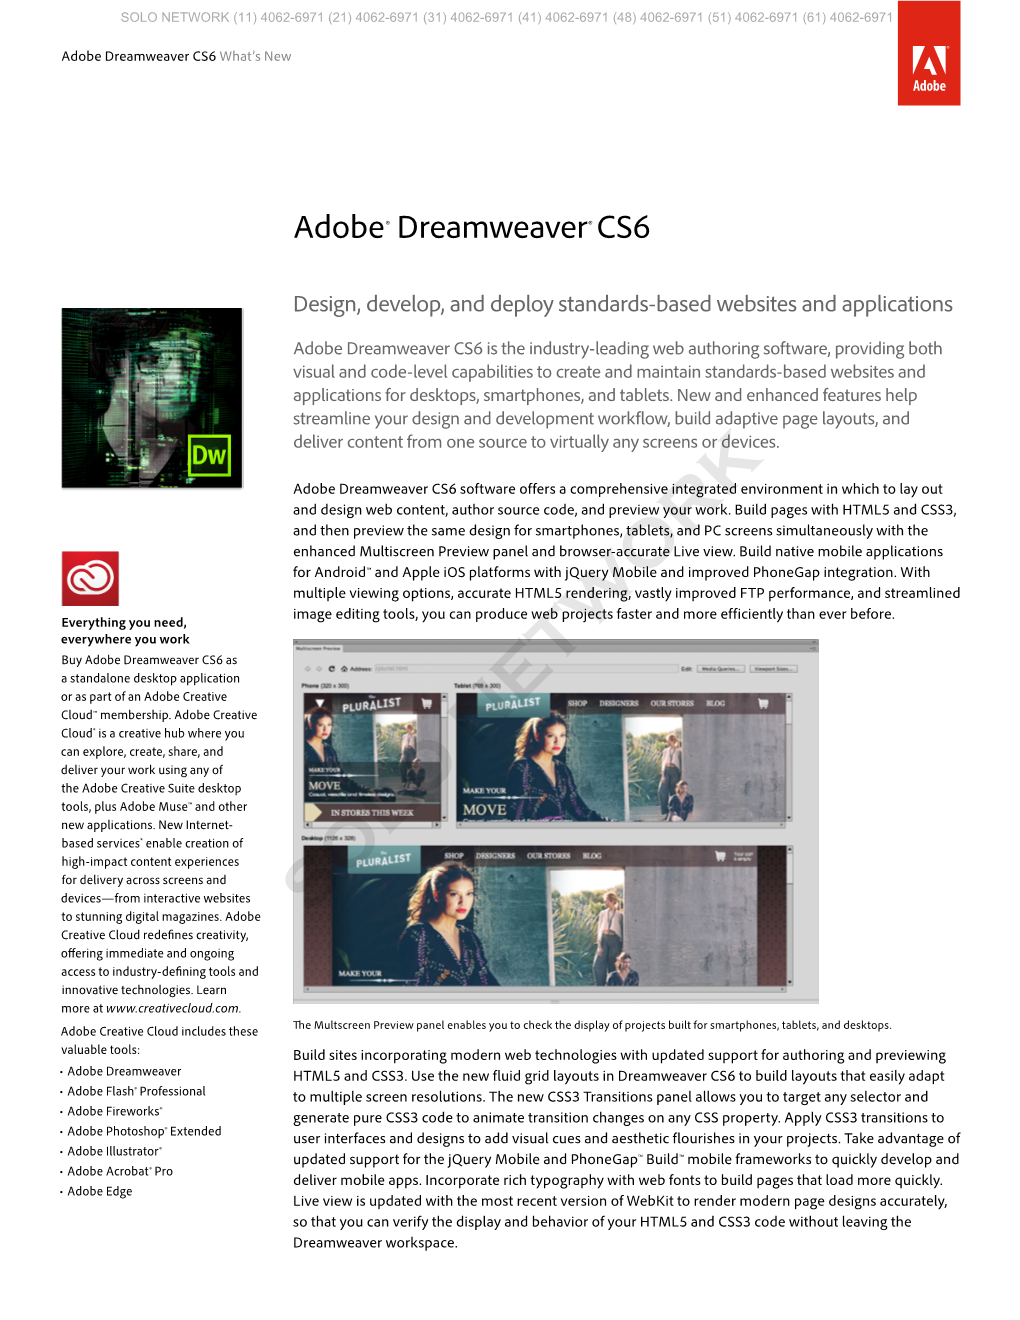 Adobe Dreamweaver CS6 | Solo Network